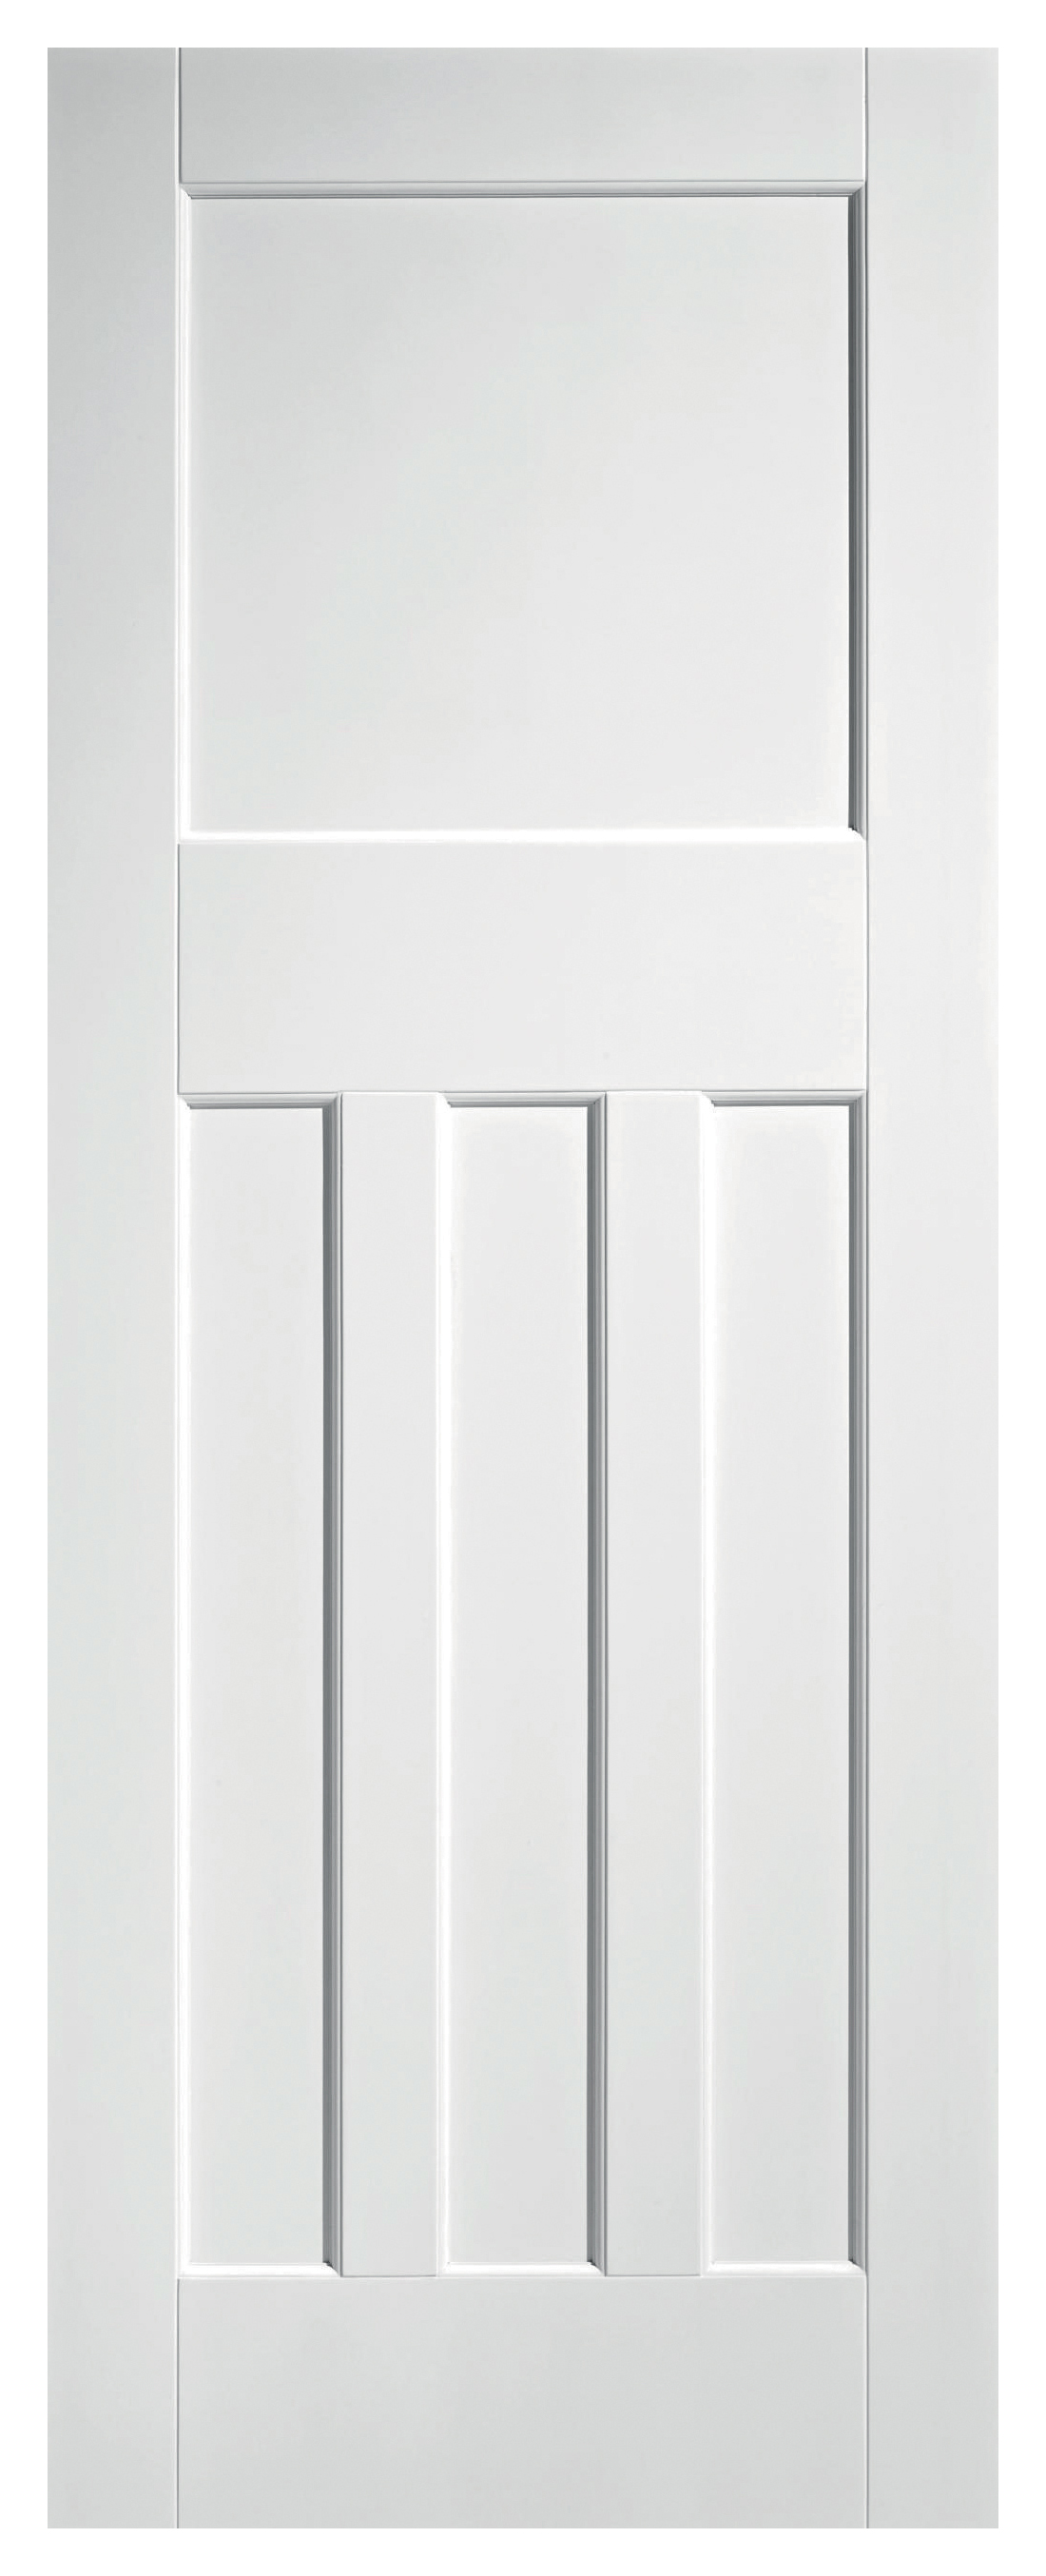 Image of LPD Internal DX 30s Primed White FD30 Fire Door - 838 x 1981mm